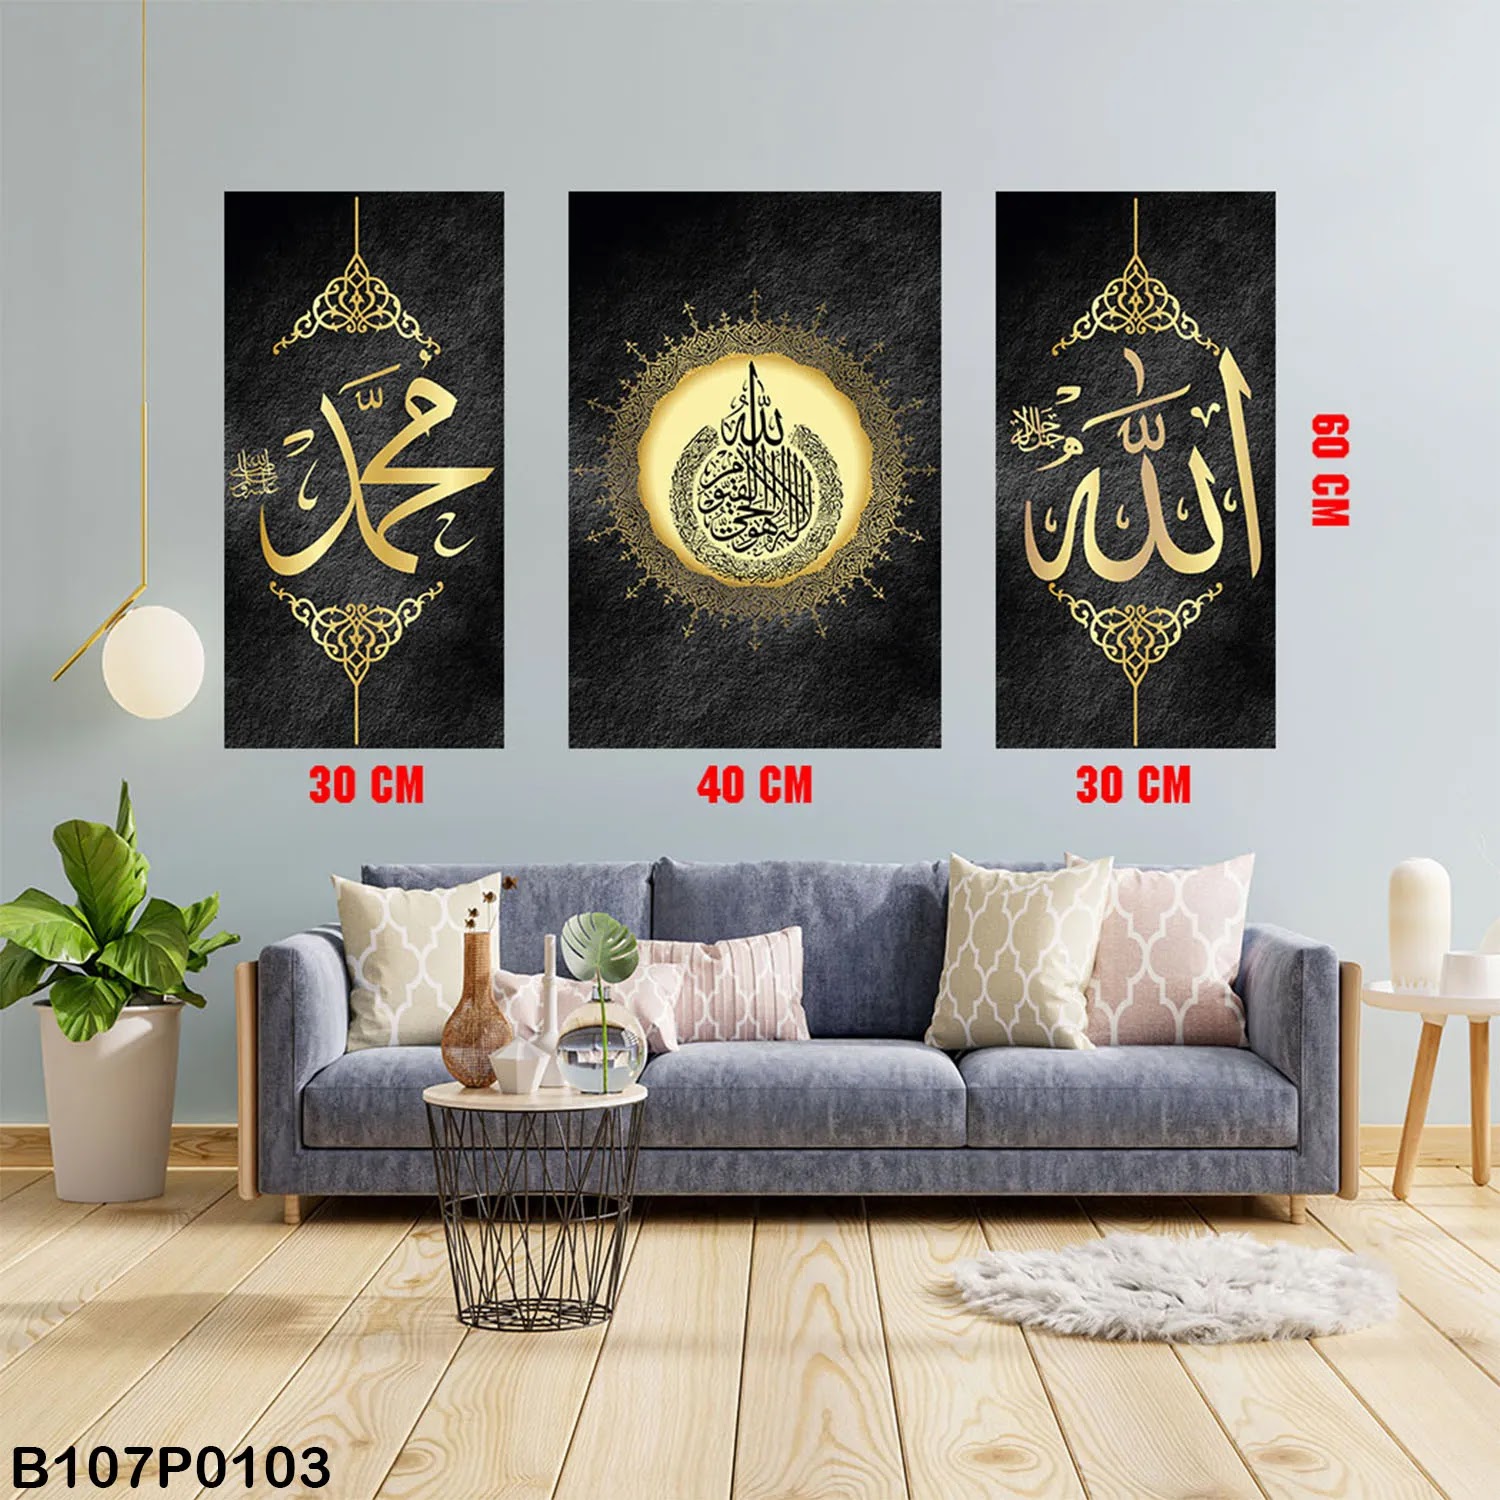 Black Triptych panel with Arabic calligraphy (Allah - Al- Kursi- Mohammad)